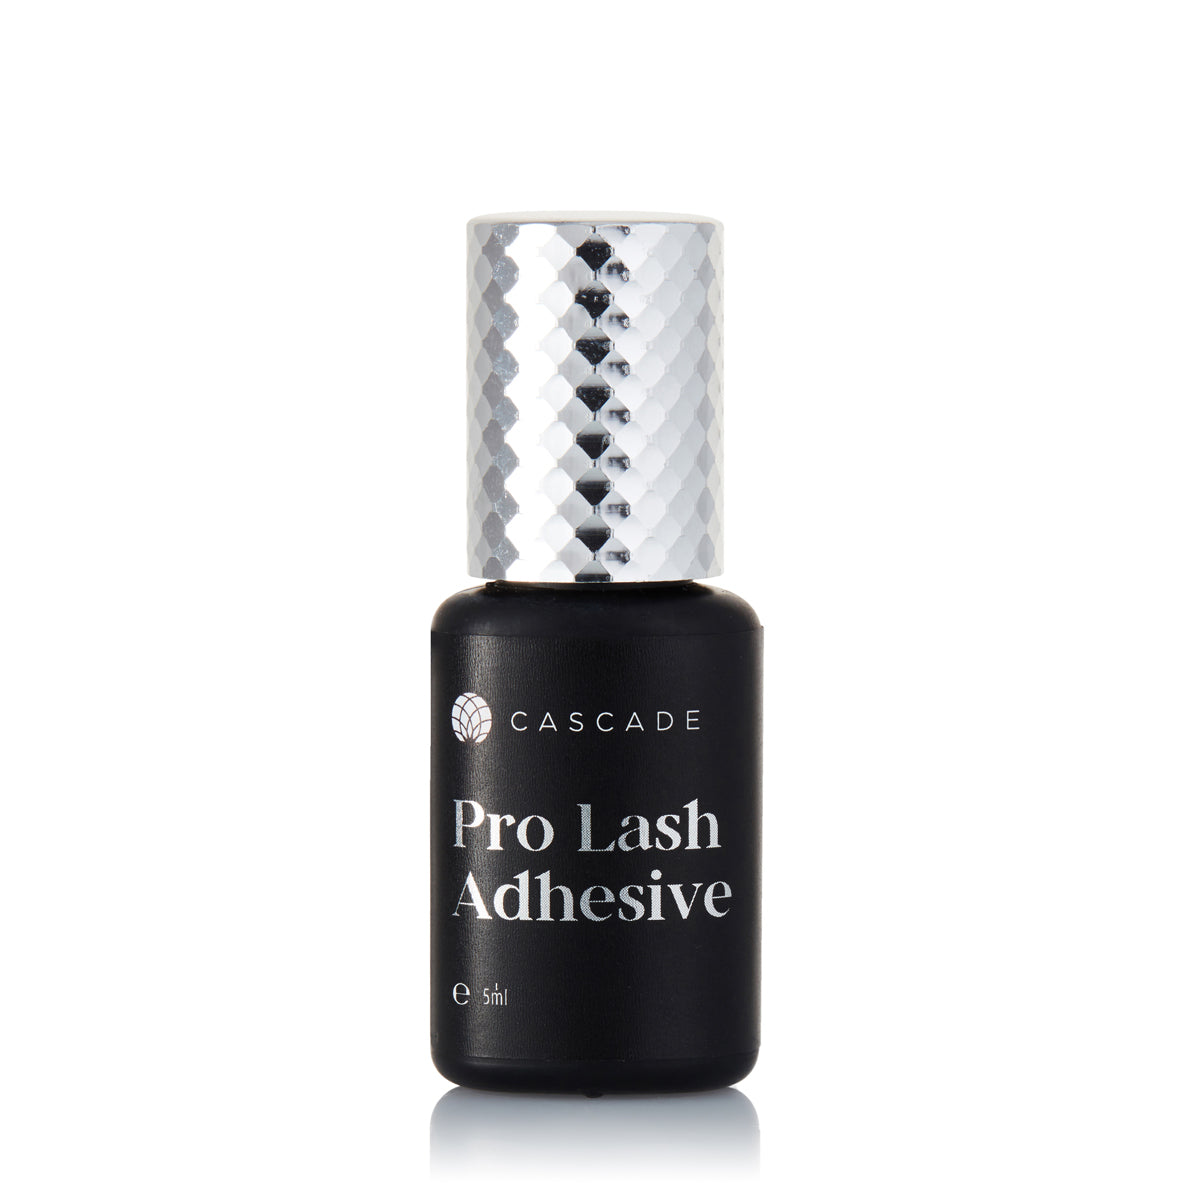 PRO Lash Adhesive